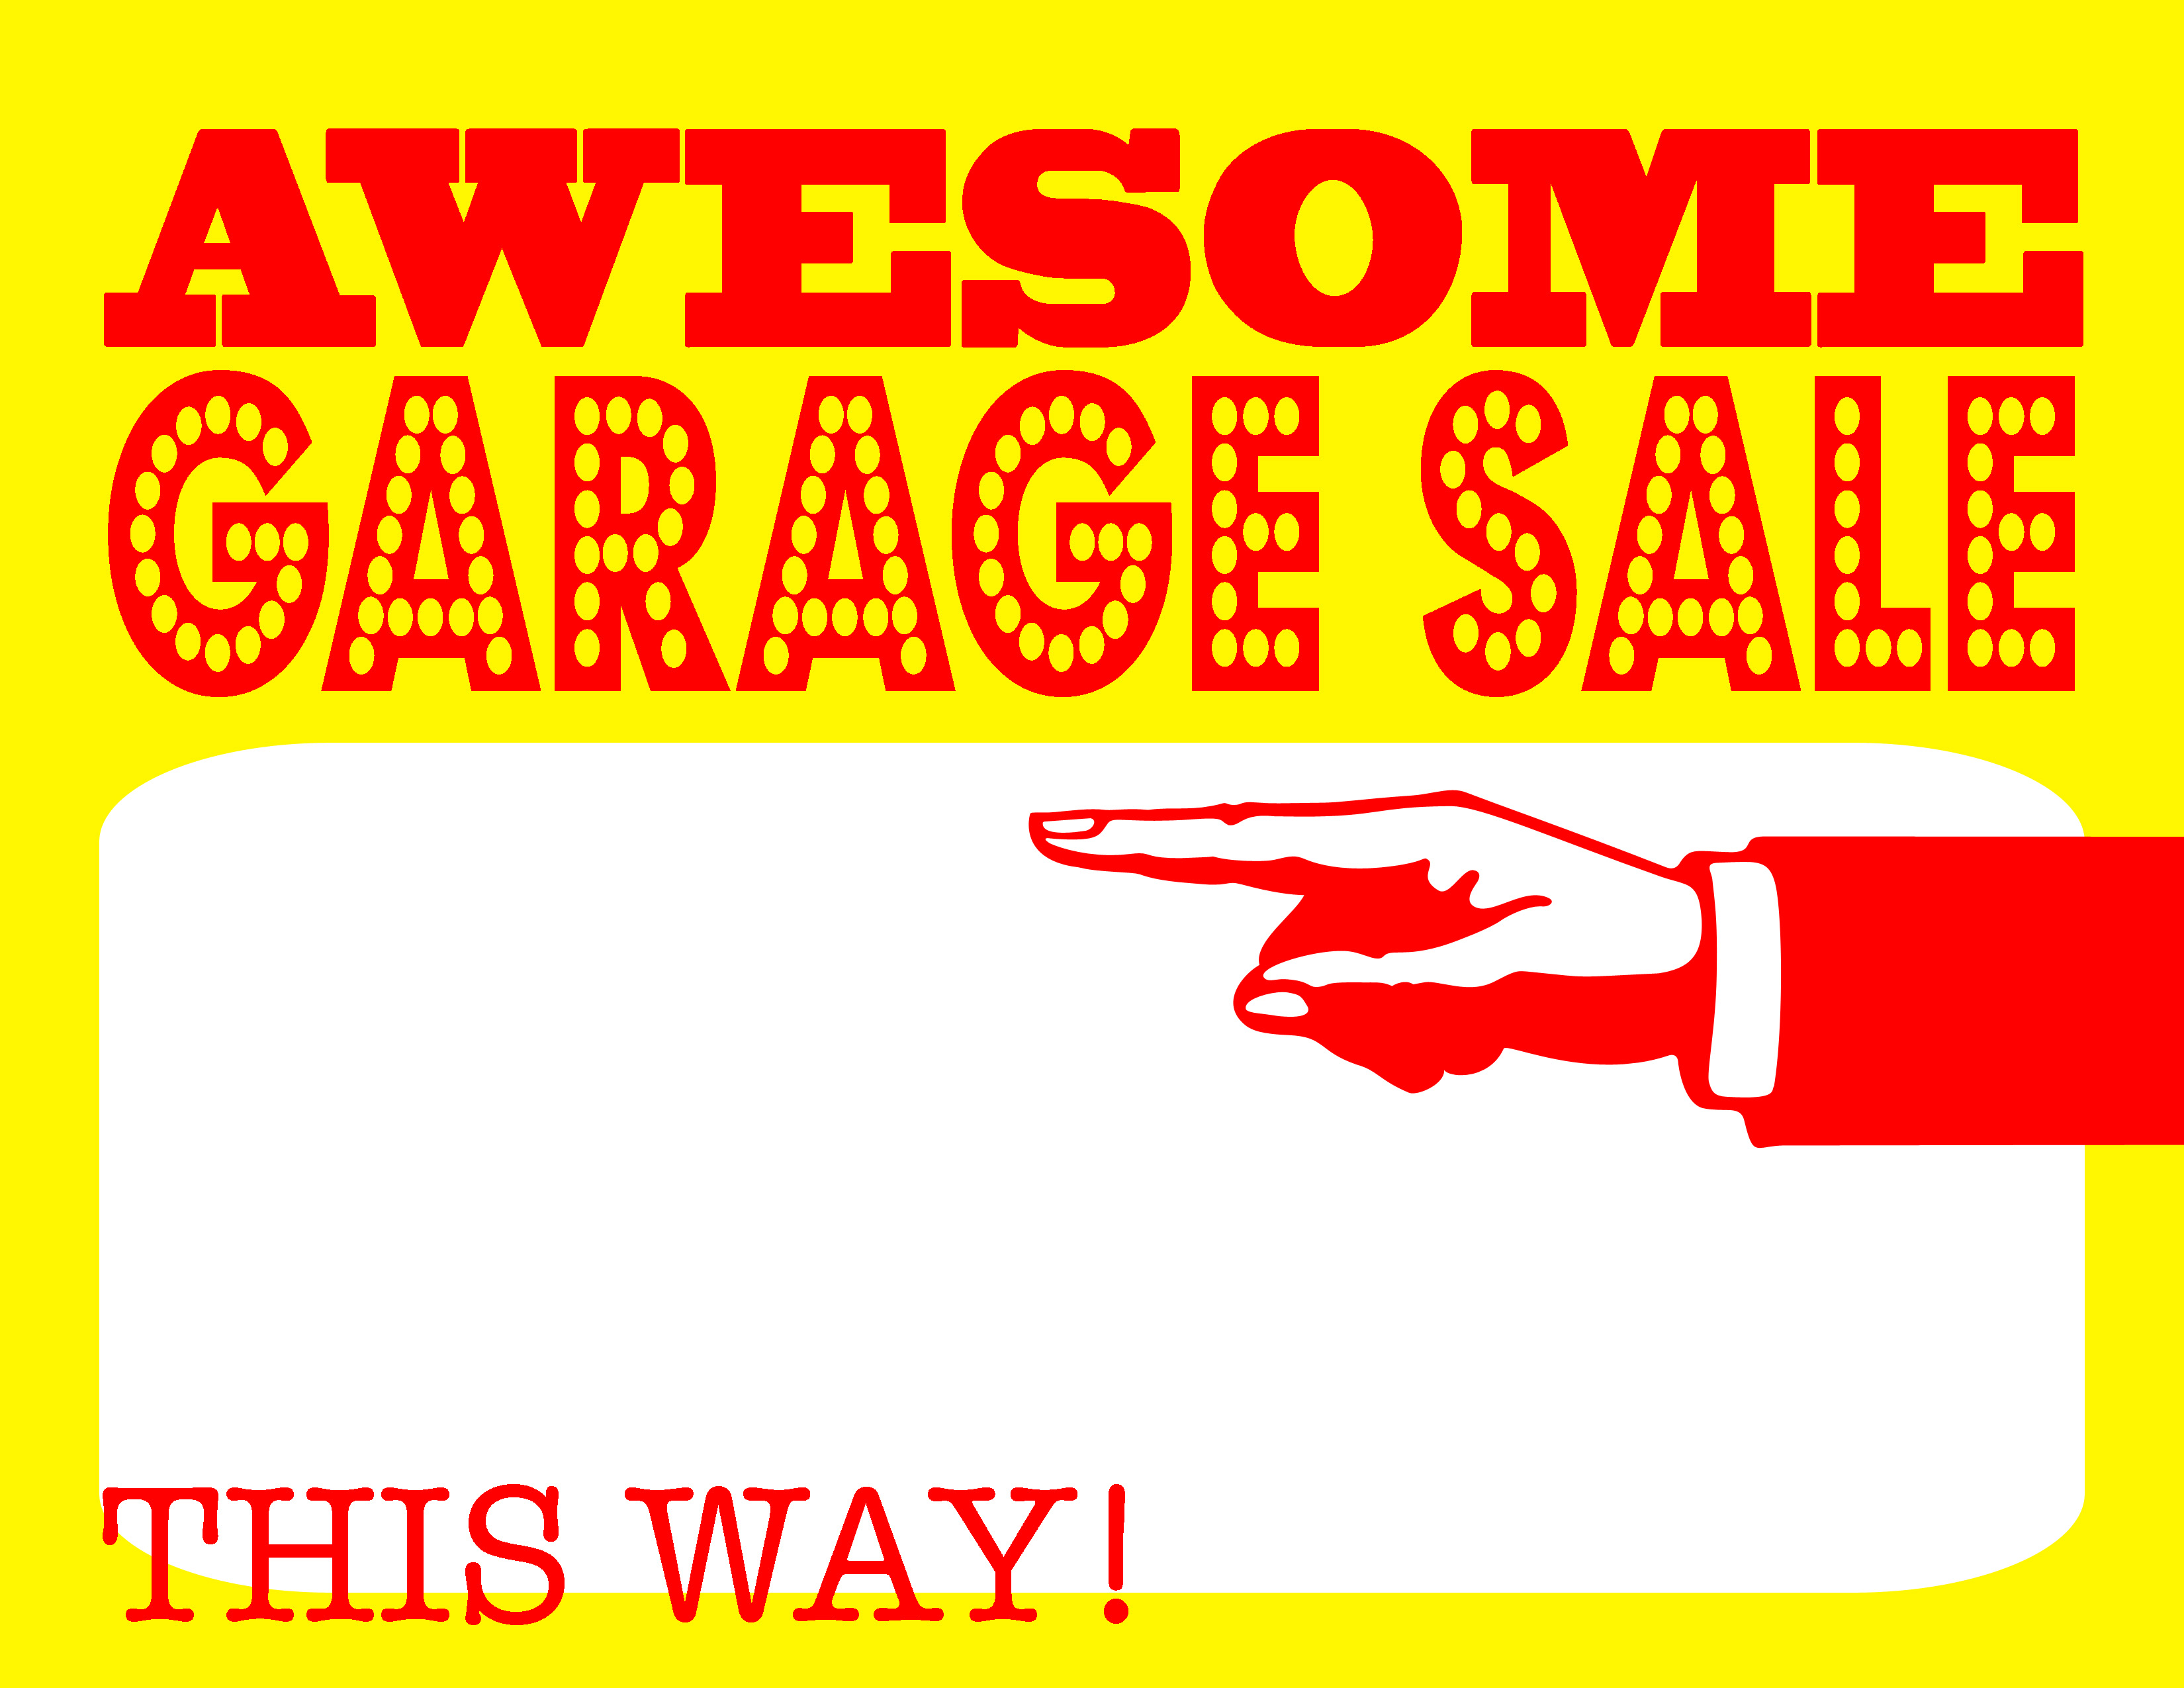 Free Garage Sale Signs, Download Free Garage Sale Signs png images